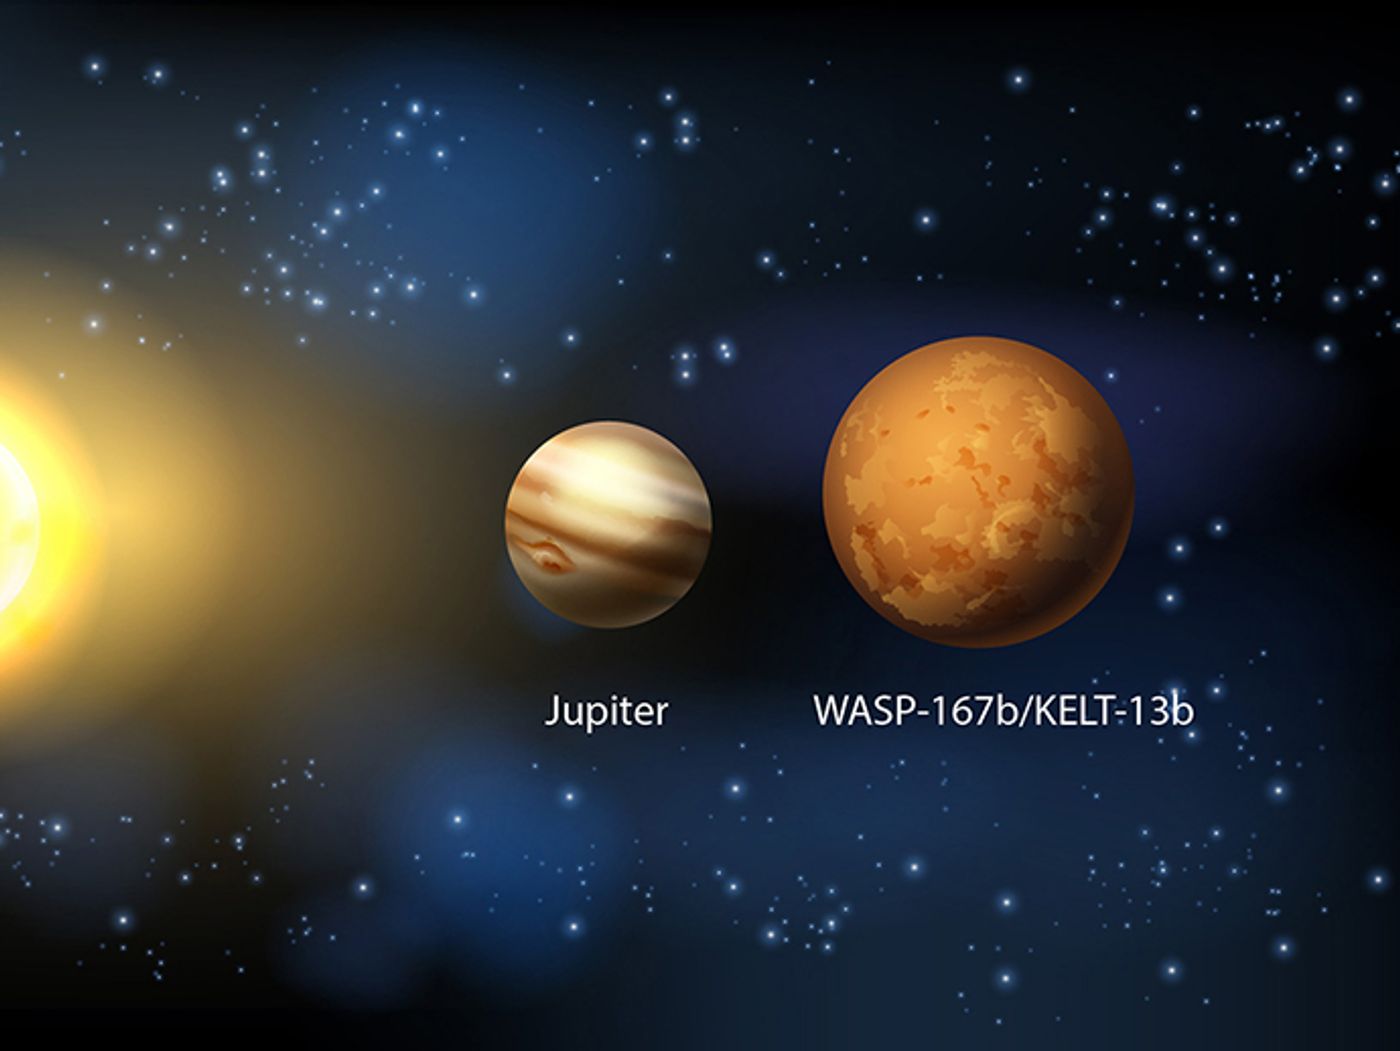 An artist's impression of WASP-167b/KELT-13b next to Jupiter.